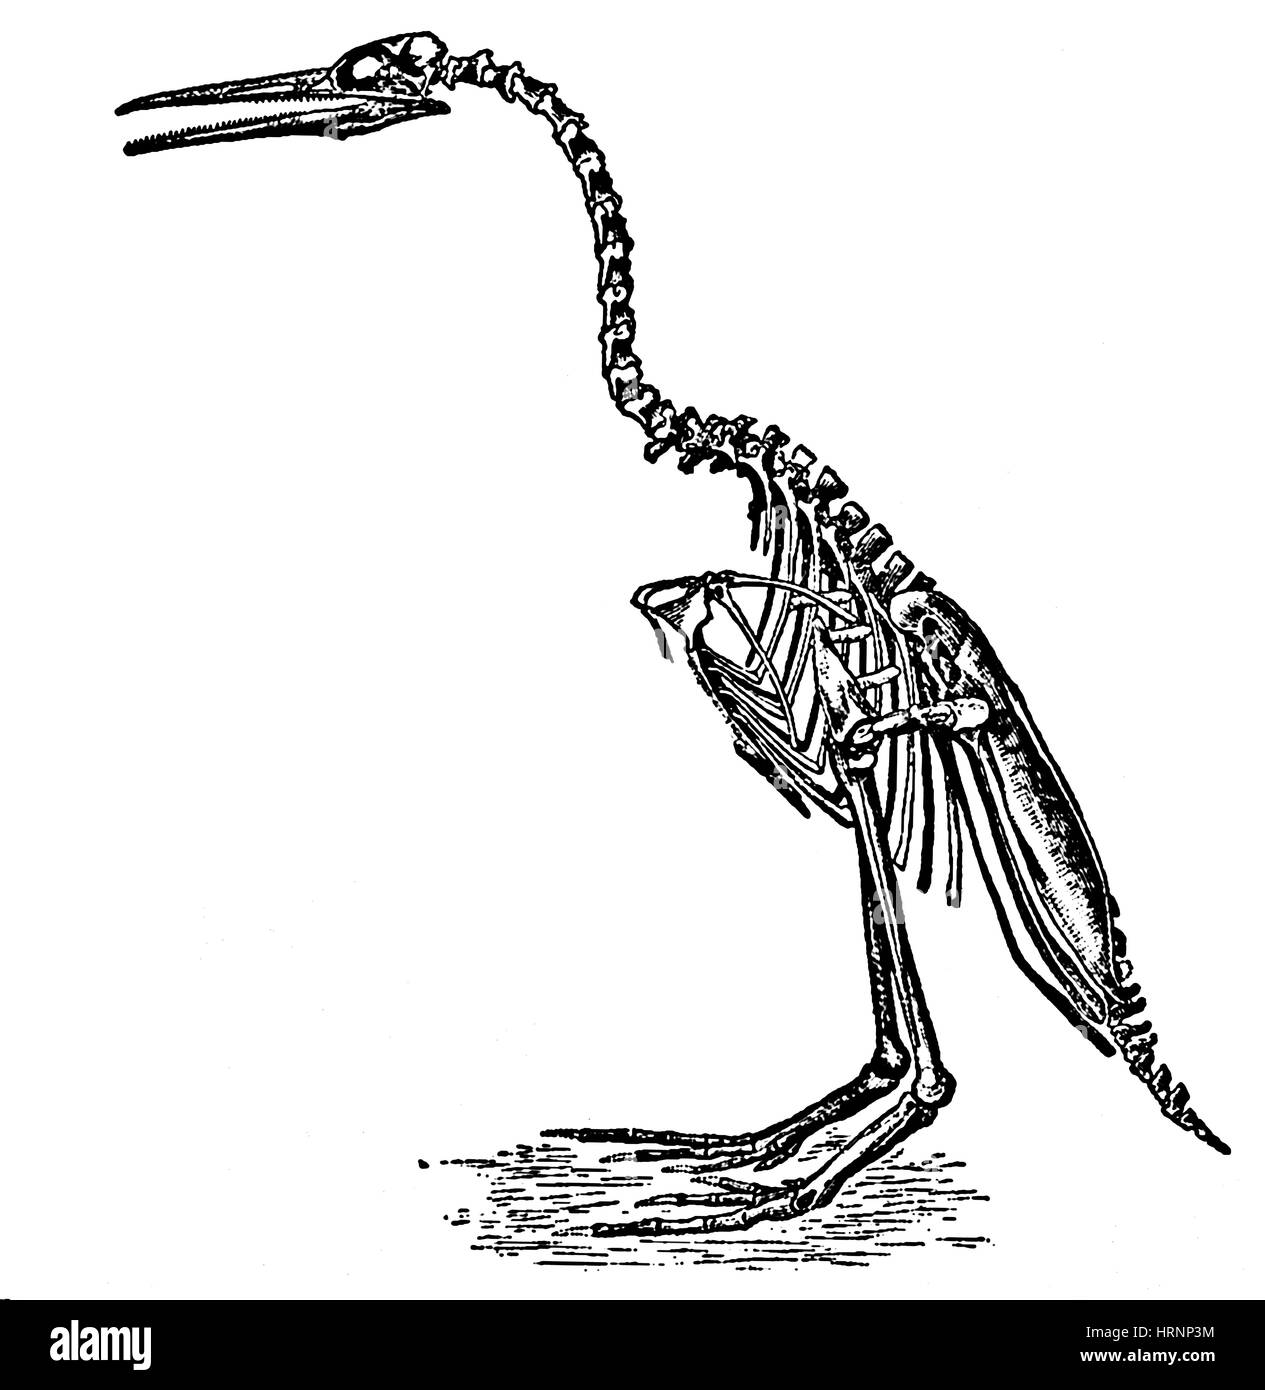 Hesperornis regalis, Cretaceous Flightless Bird Stock Photo